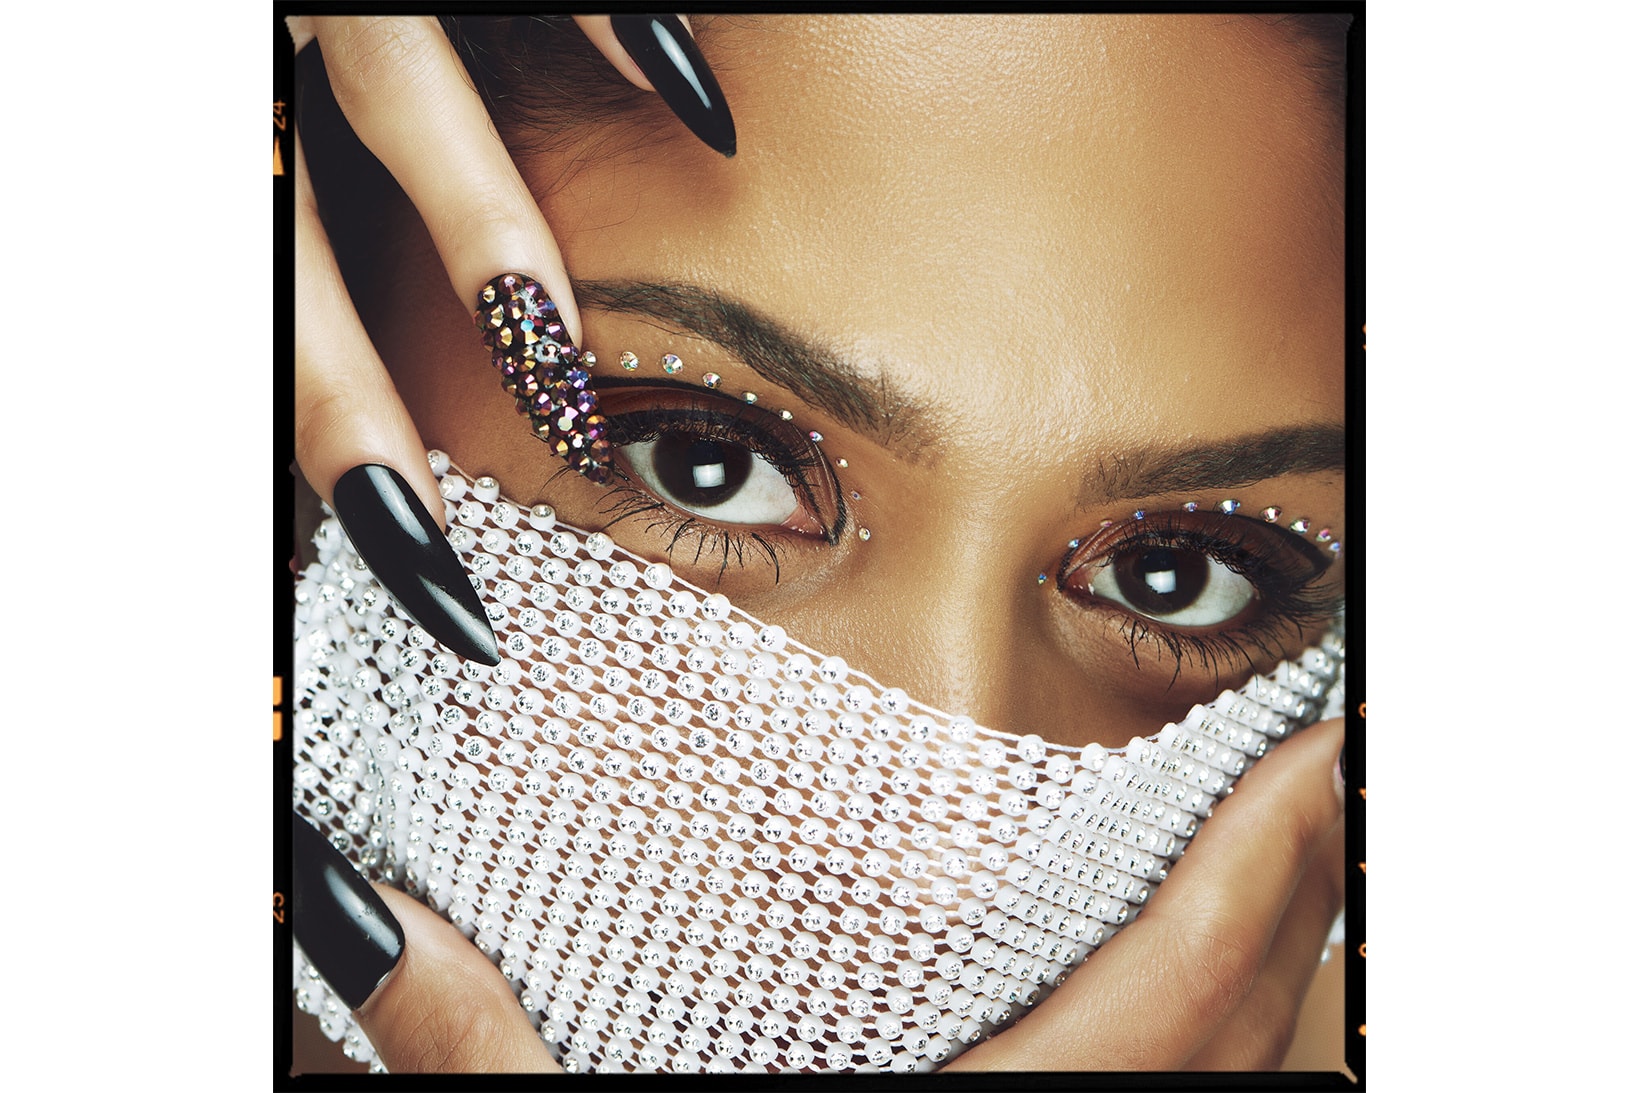 uoma beauty Drama Bomb mascara Extreme Volume Nourishing eye makeup face masks campaign release info